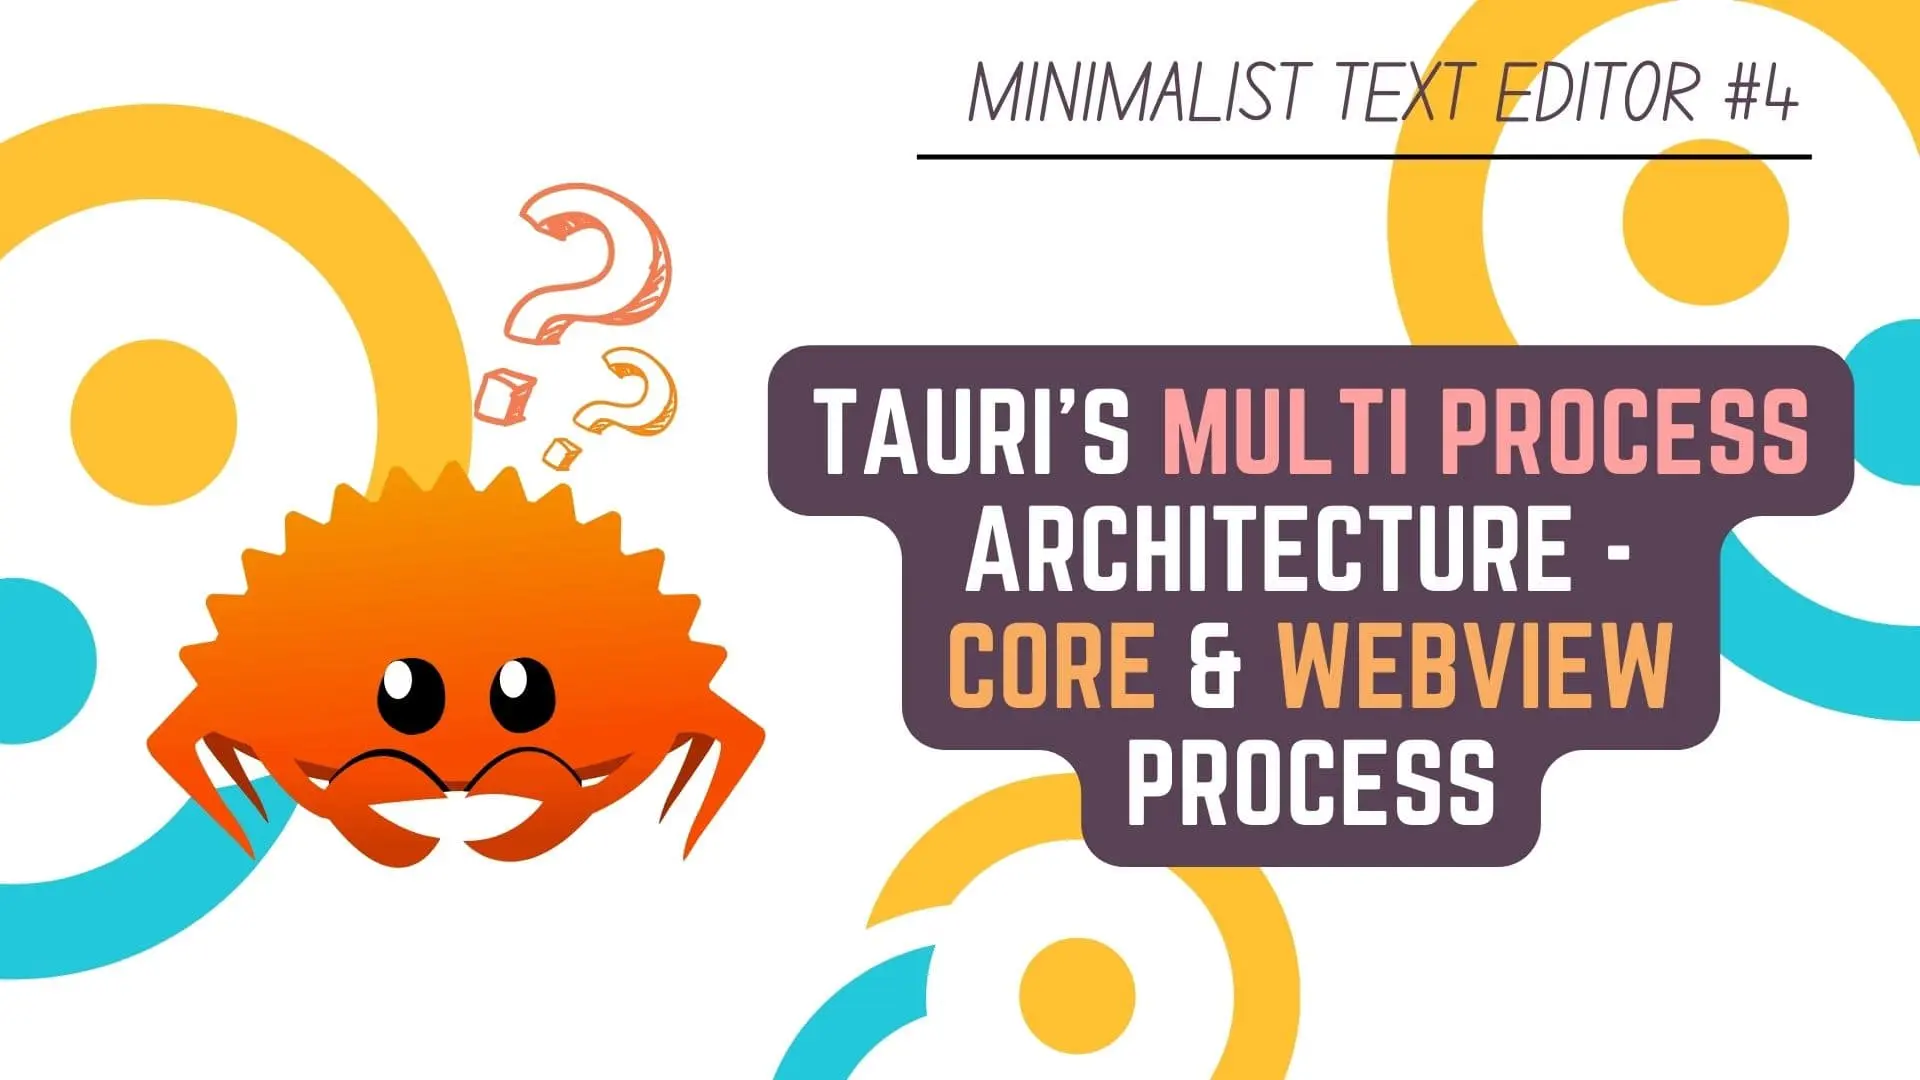 Minimalist Text Editor in Rust Programming Language & Tauri - #4 Tauri Multi Process Architecture - Core and WebView Process - Rust & Tauri Tutorial - Featured Image